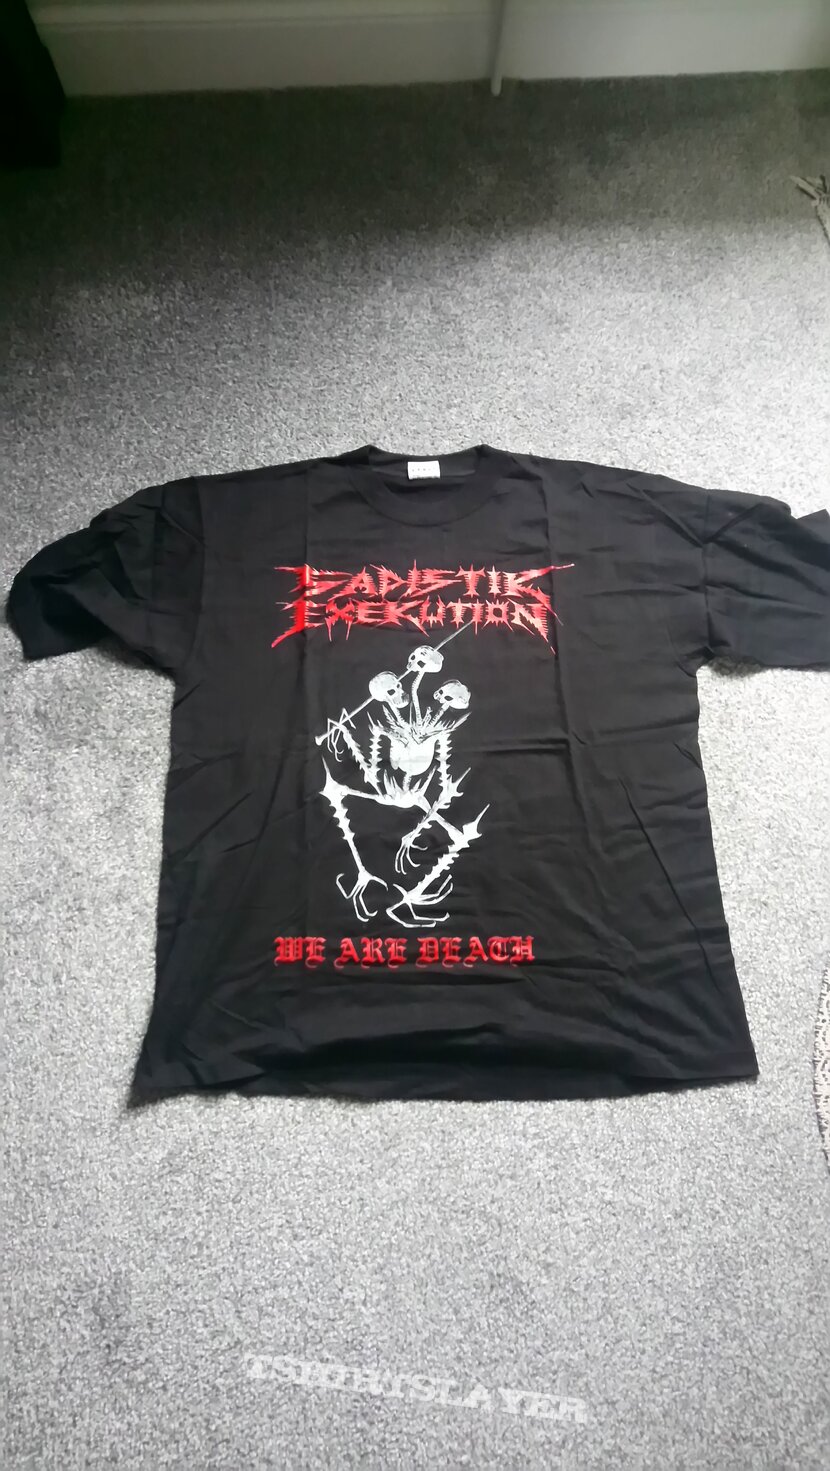 Sadistik Exekution - We are Death... Shirt | TShirtSlayer TShirt and  BattleJacket Gallery